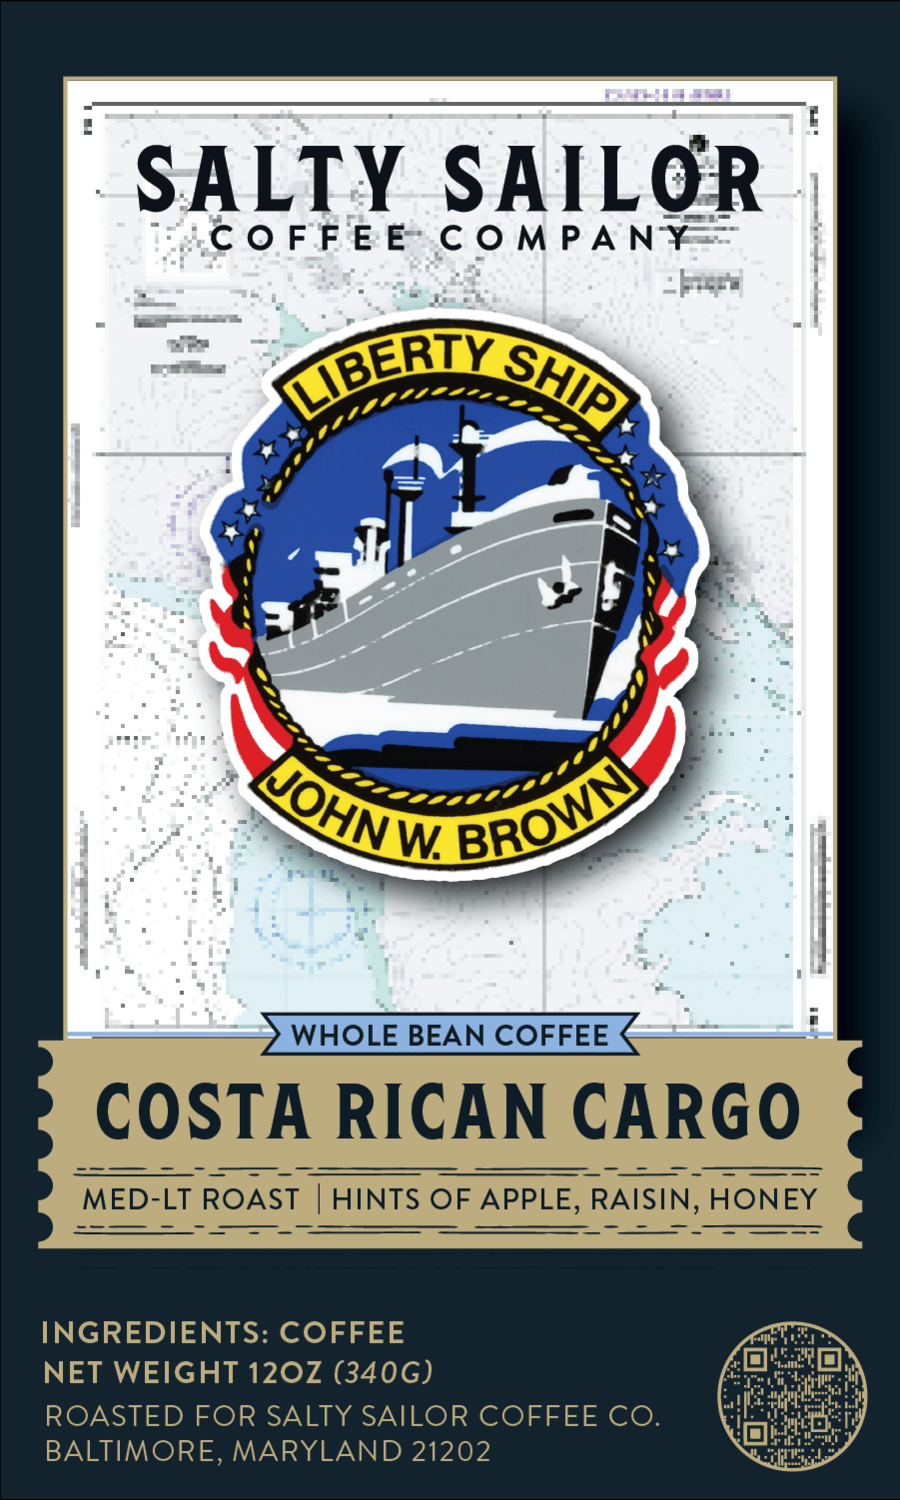 SS JOHN W BROWN Costa Rican Cargo